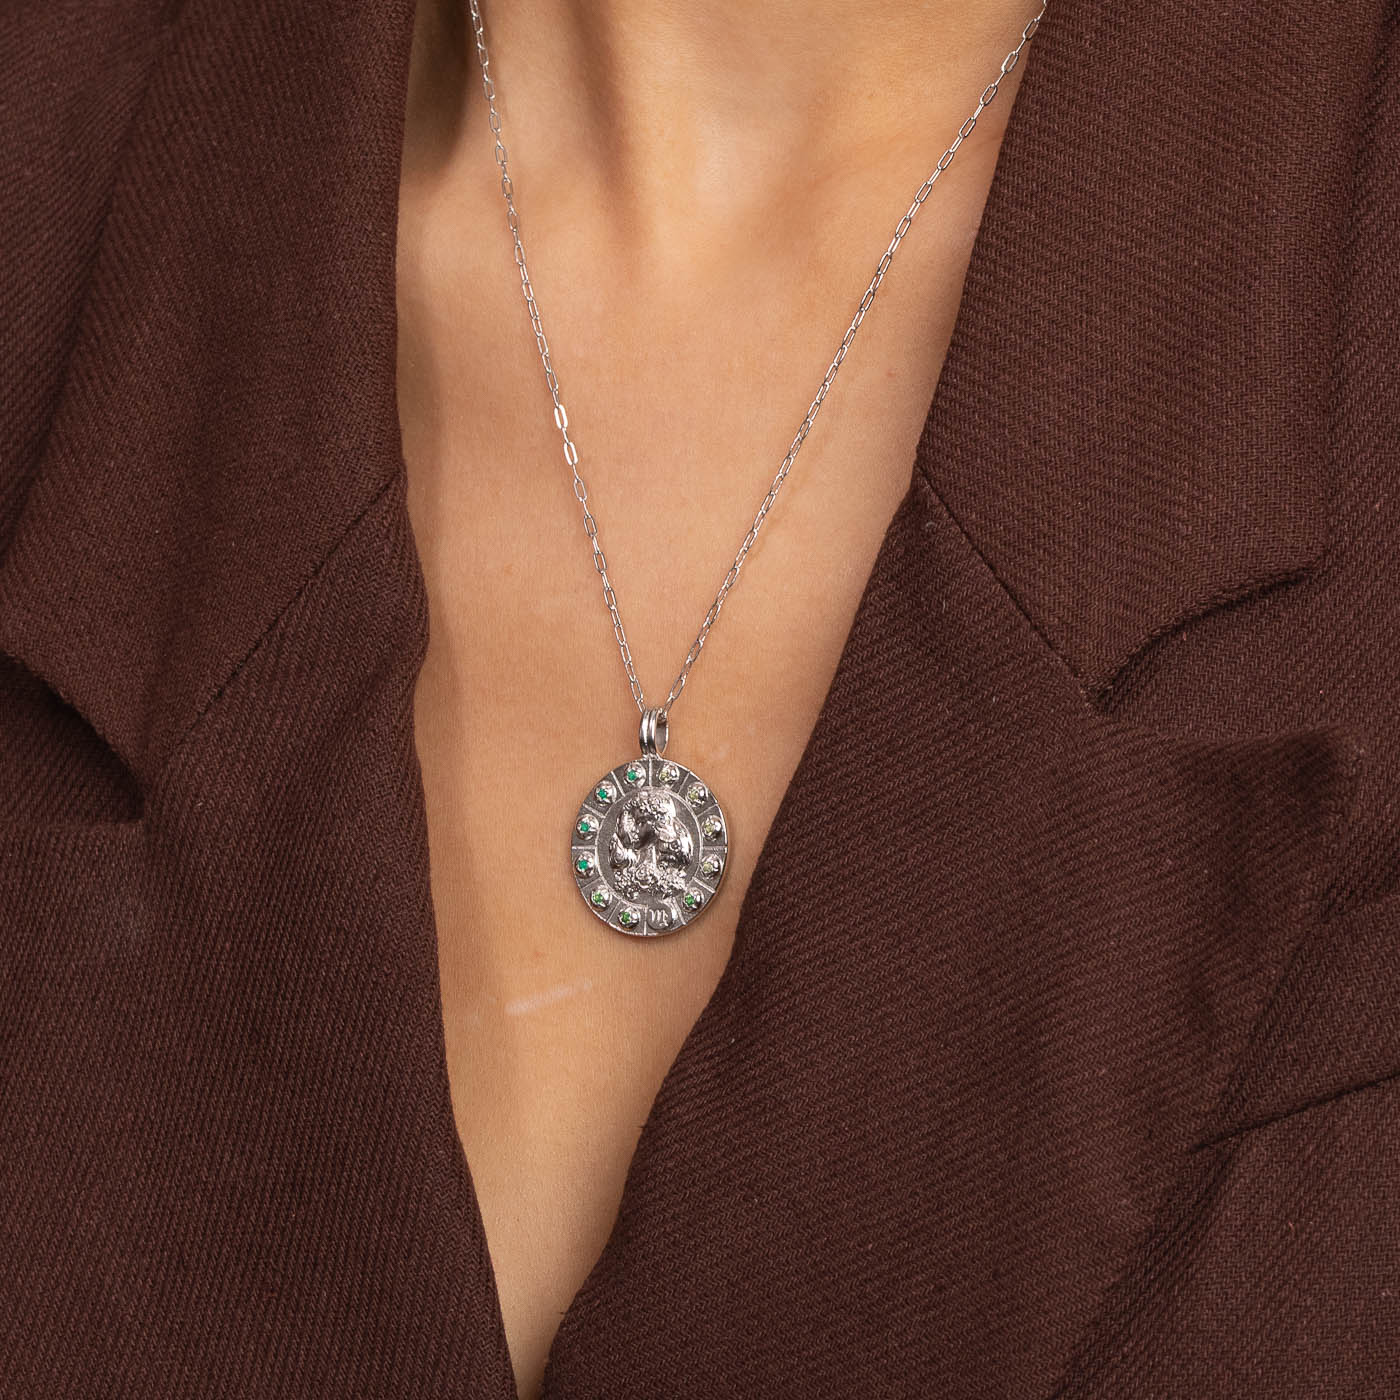 Virgo Bold Zodiac Pendant Necklace in Silver worn